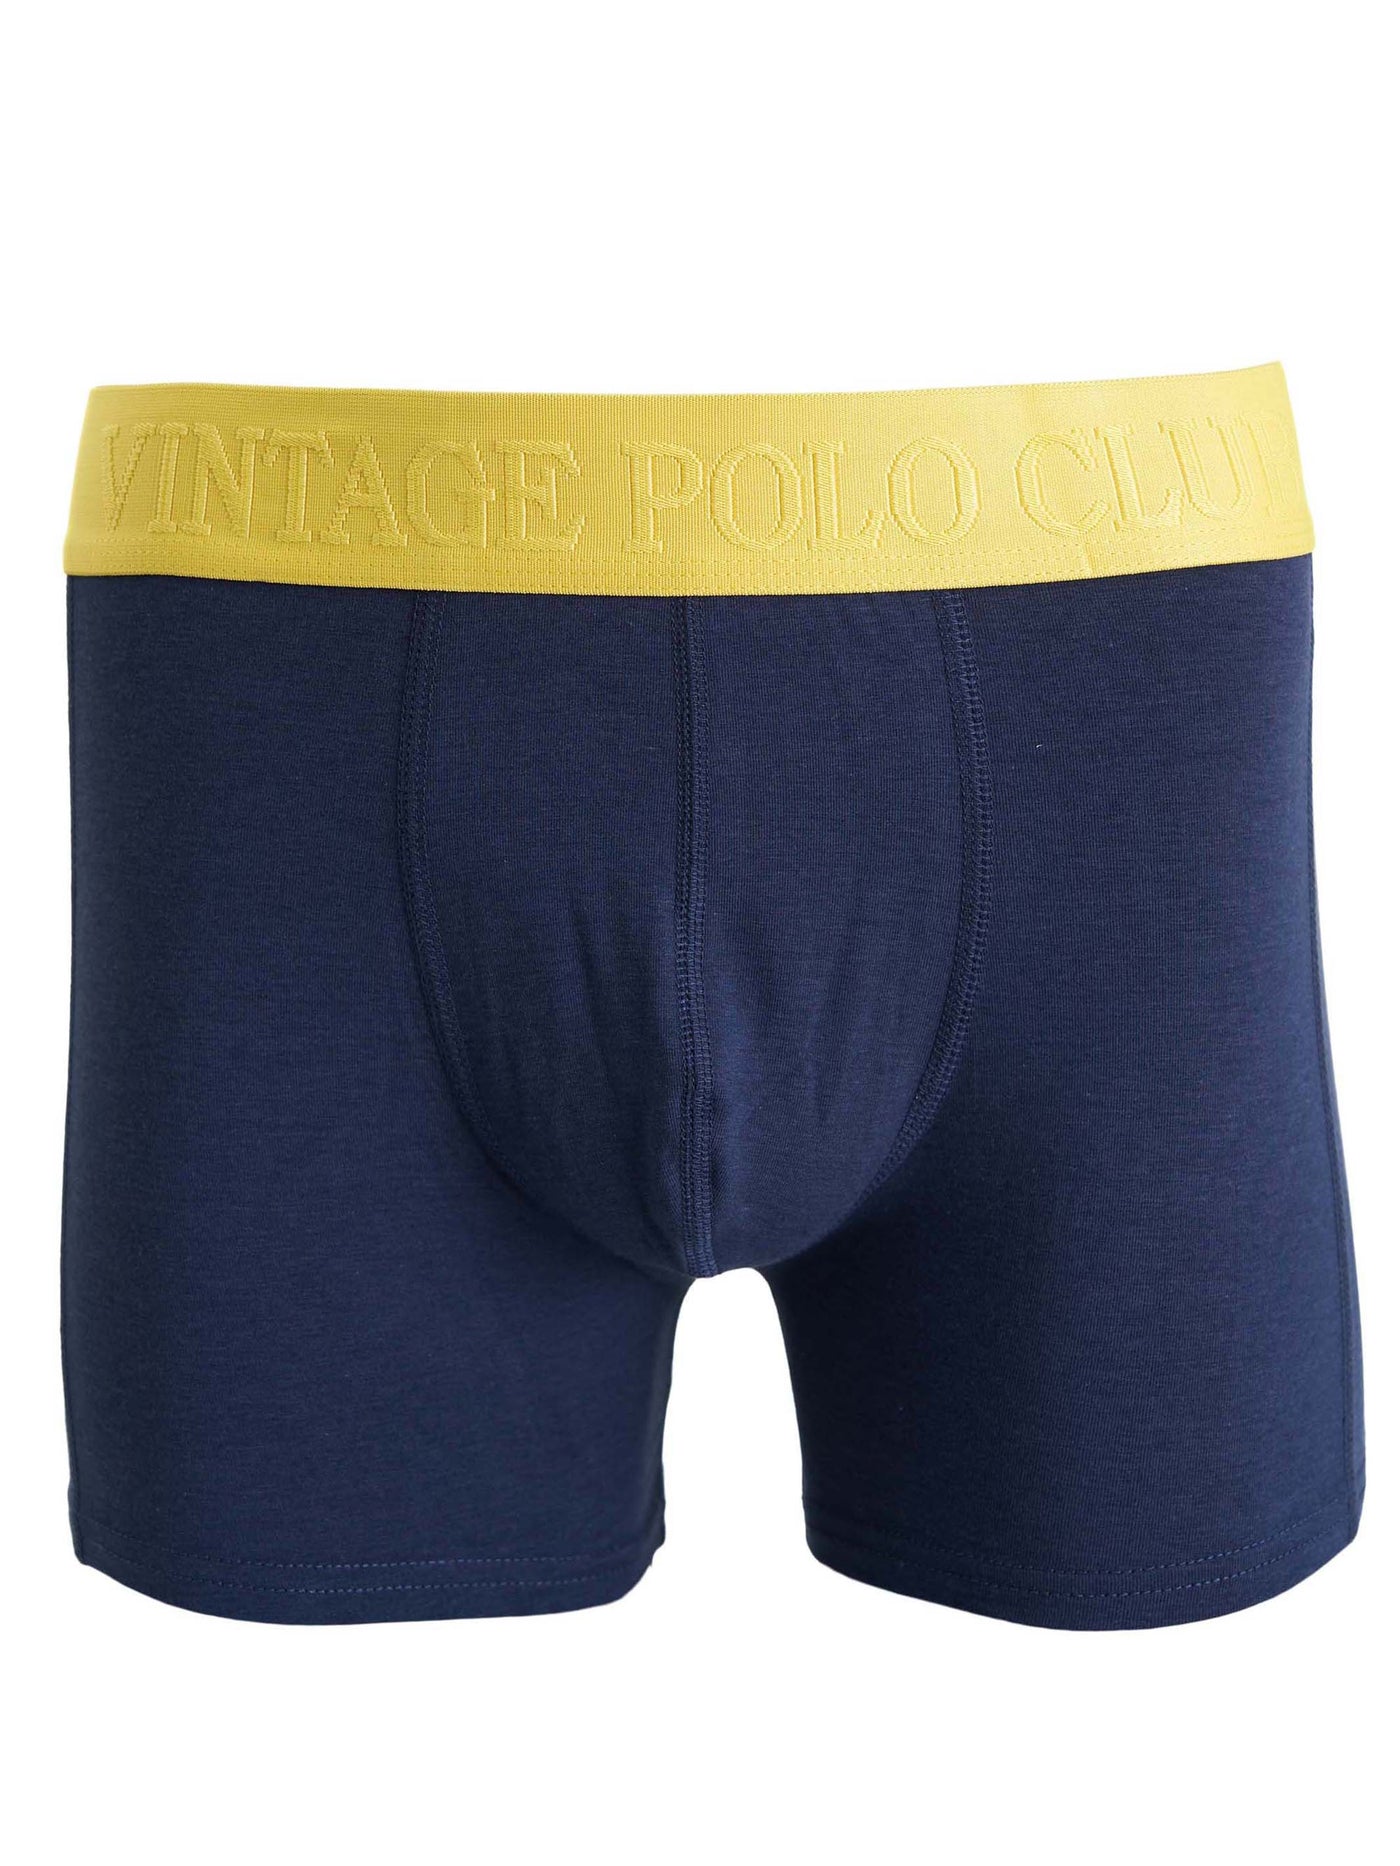 Bambus boxershorts underbukser til mænd blå med gul kant